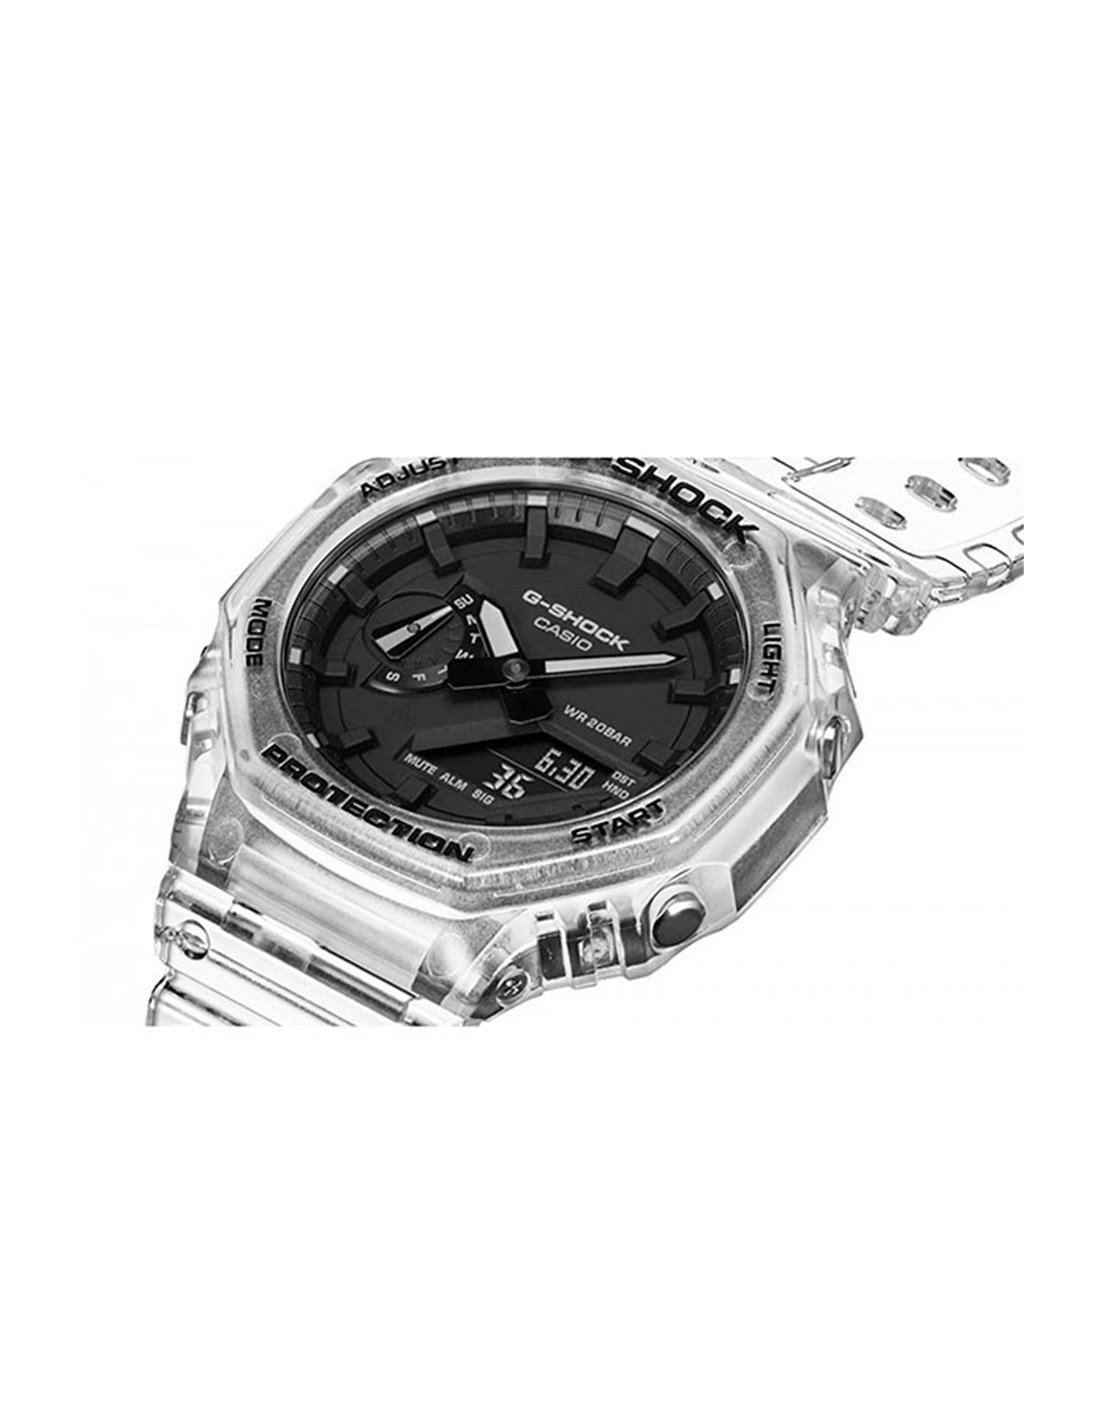 G-Shock Classic Style GA-2100SKE-7AER Skeleton Series - White Watch • EAN:  4549526297939 •